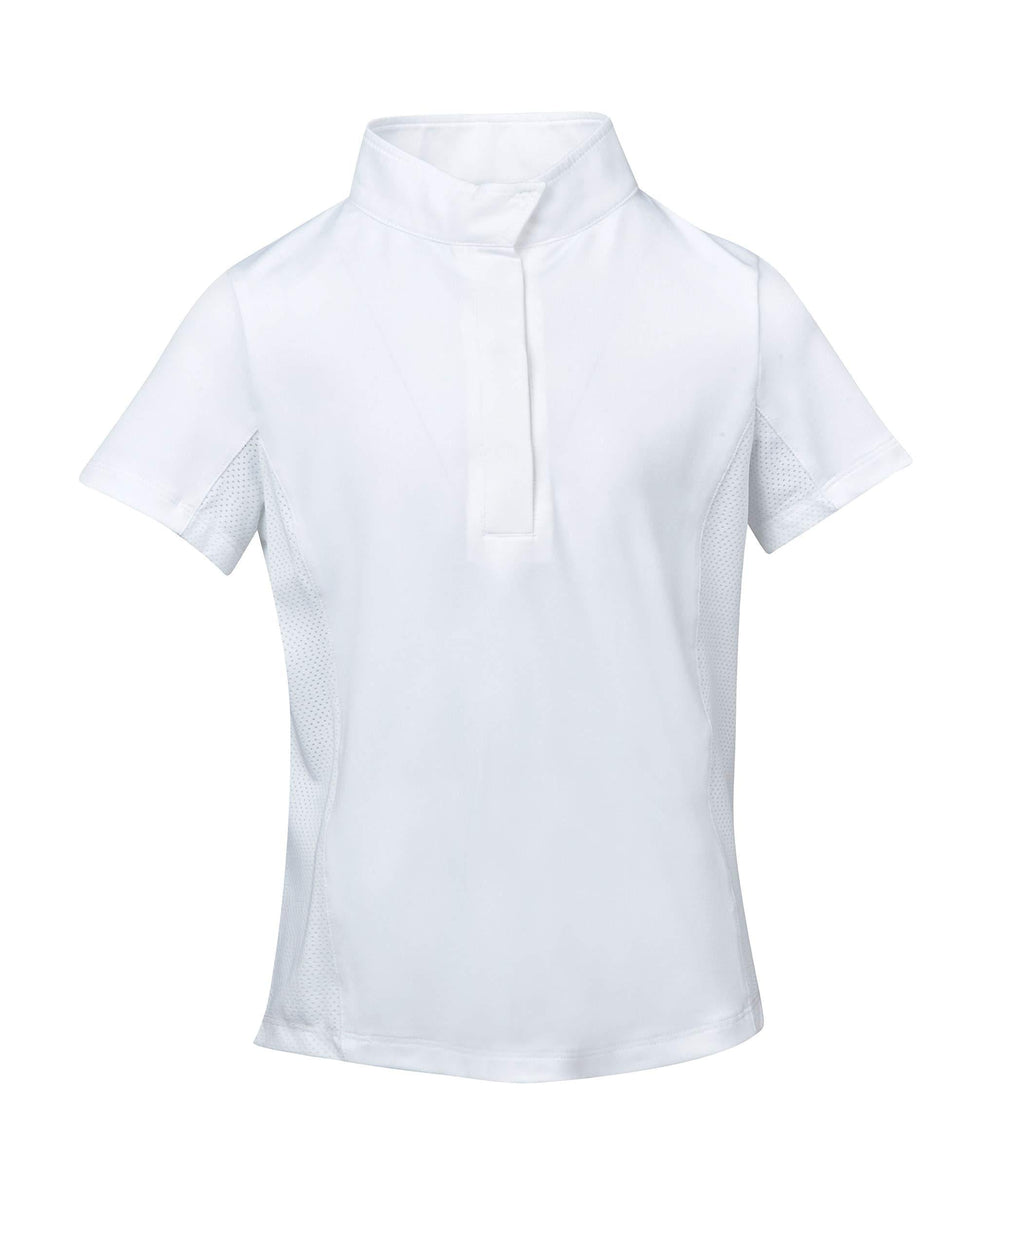 Dublin Ria Short Sleeve Competition Shirt White/Navy Ladies XLarge - PawsPlanet Australia